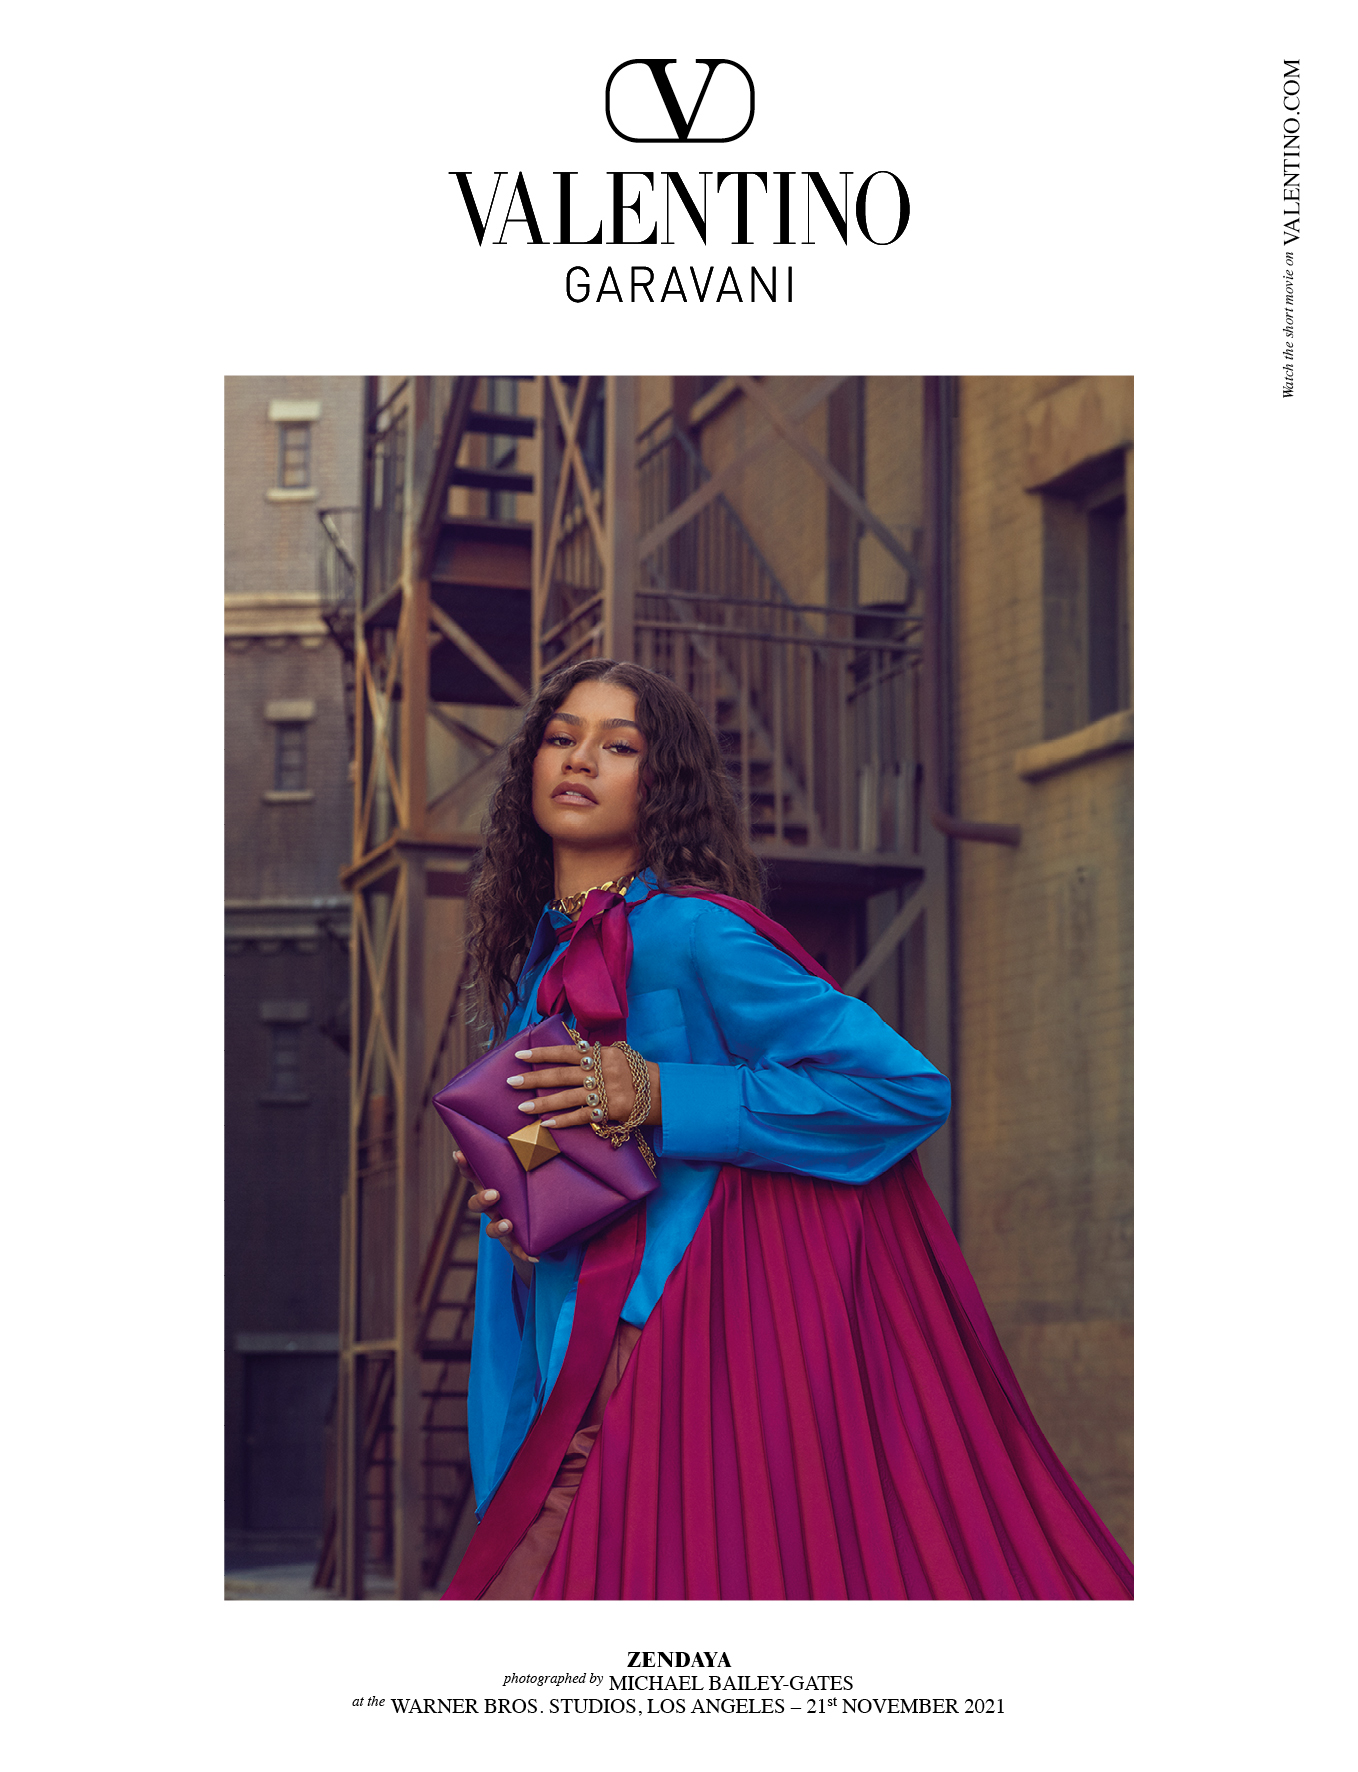 Zendaya Announced as Louis Vuitton's Latest House Ambassador - S/ magazine